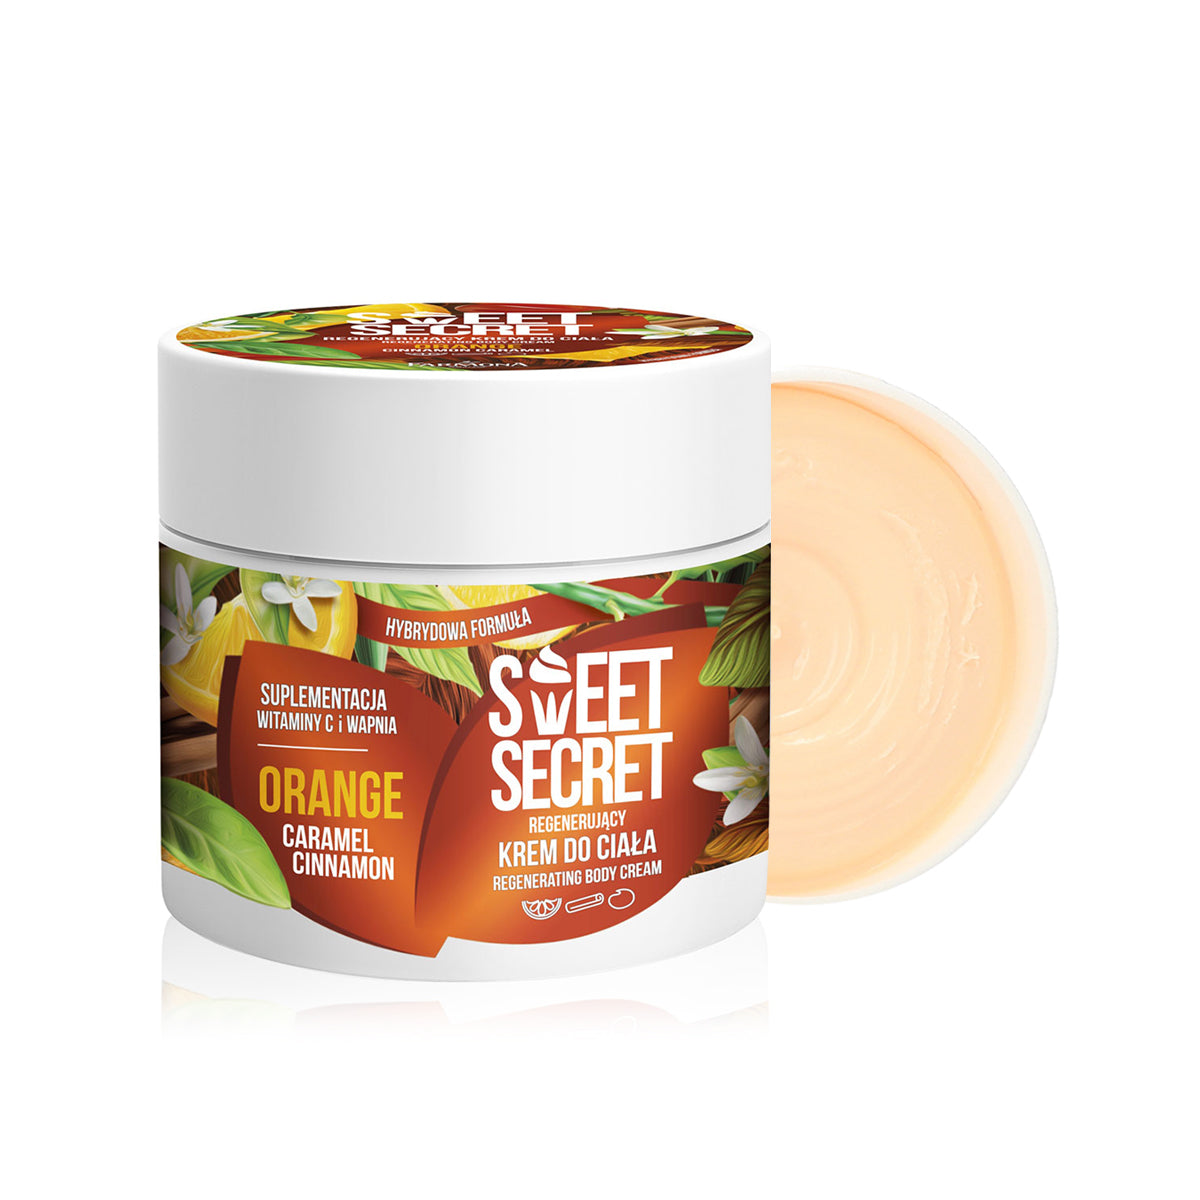 SWEET SECRET Orange regenerating body cream 200ml